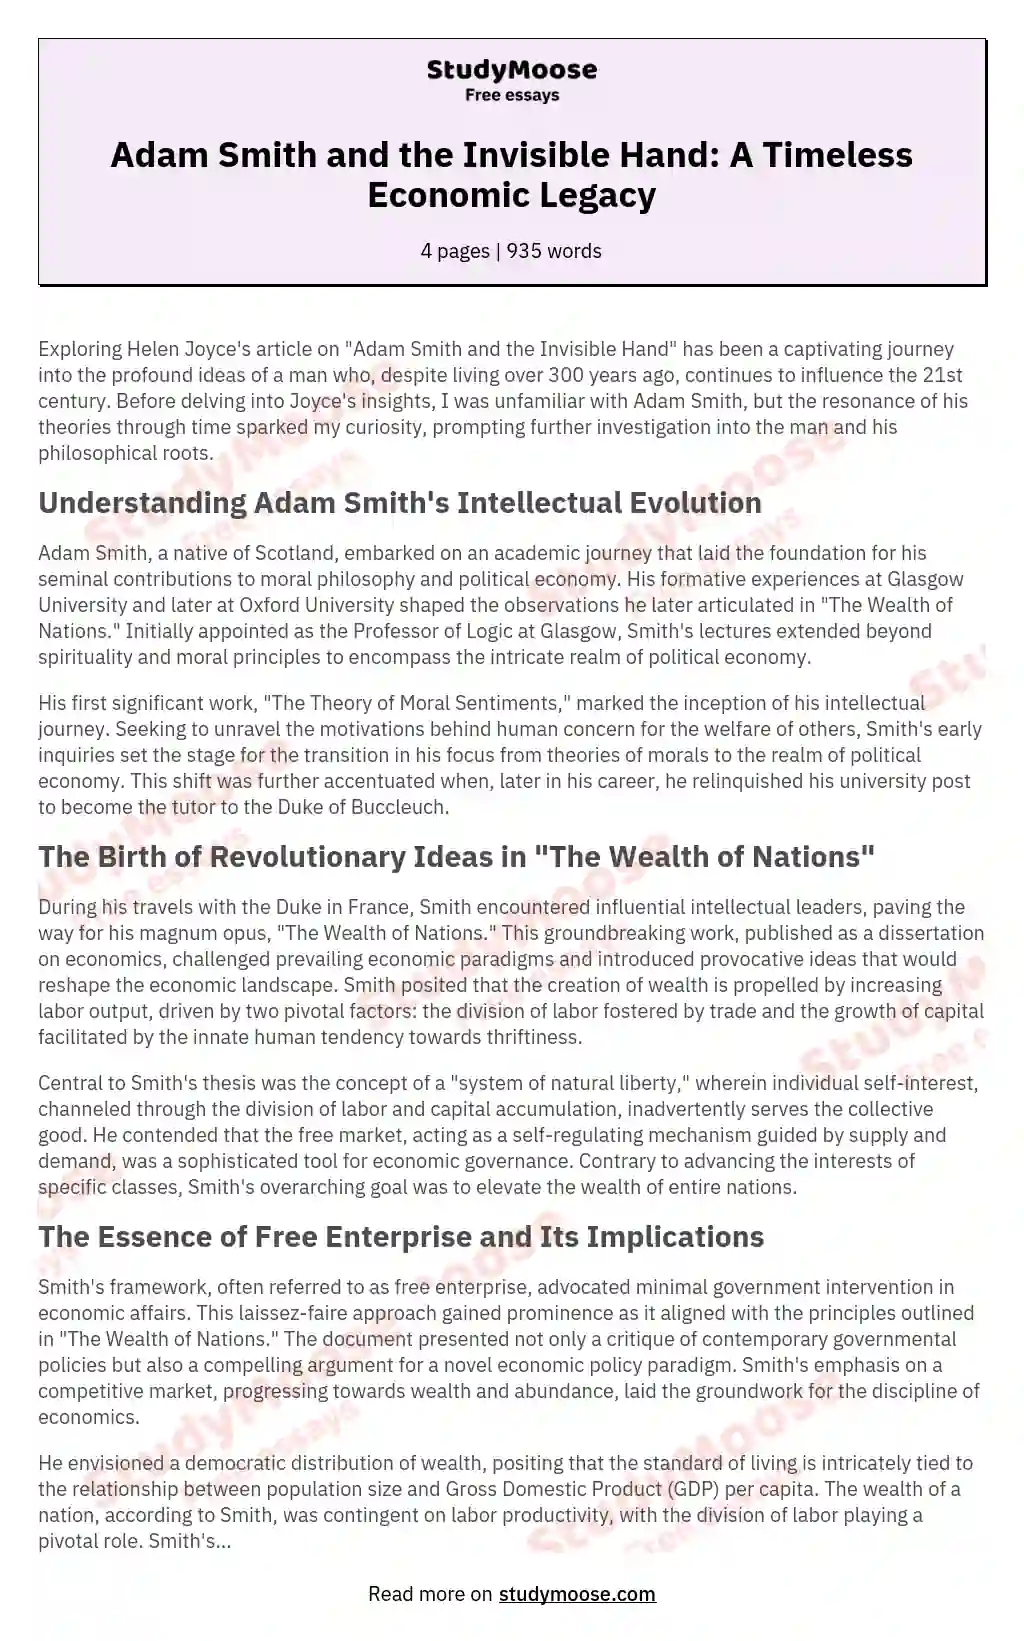 Adam Smith the Father of Modern Economics